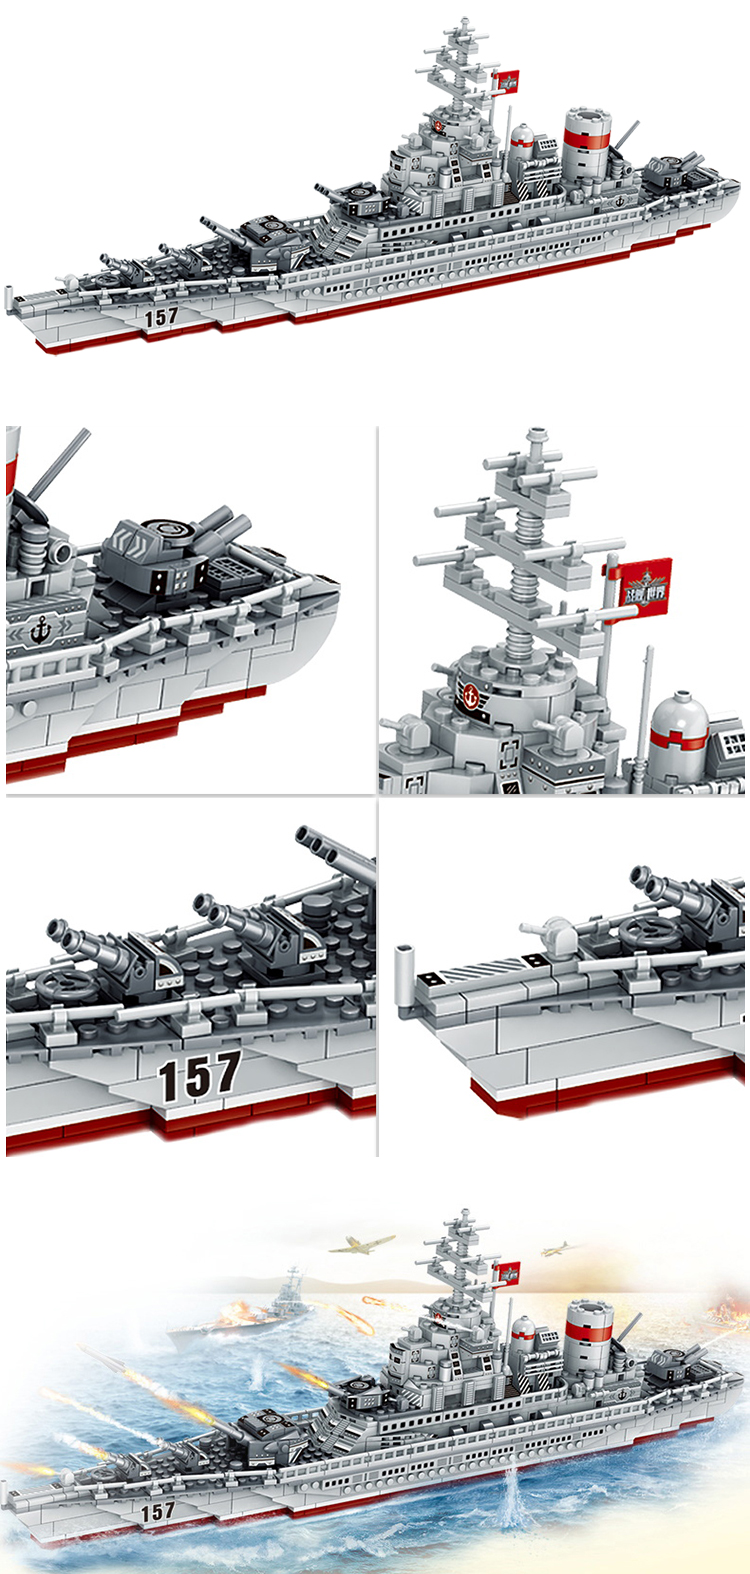 WOMA TOYS AliExpress hot sale War fleet military battleship model educational building blocks battle ships for adult jouet